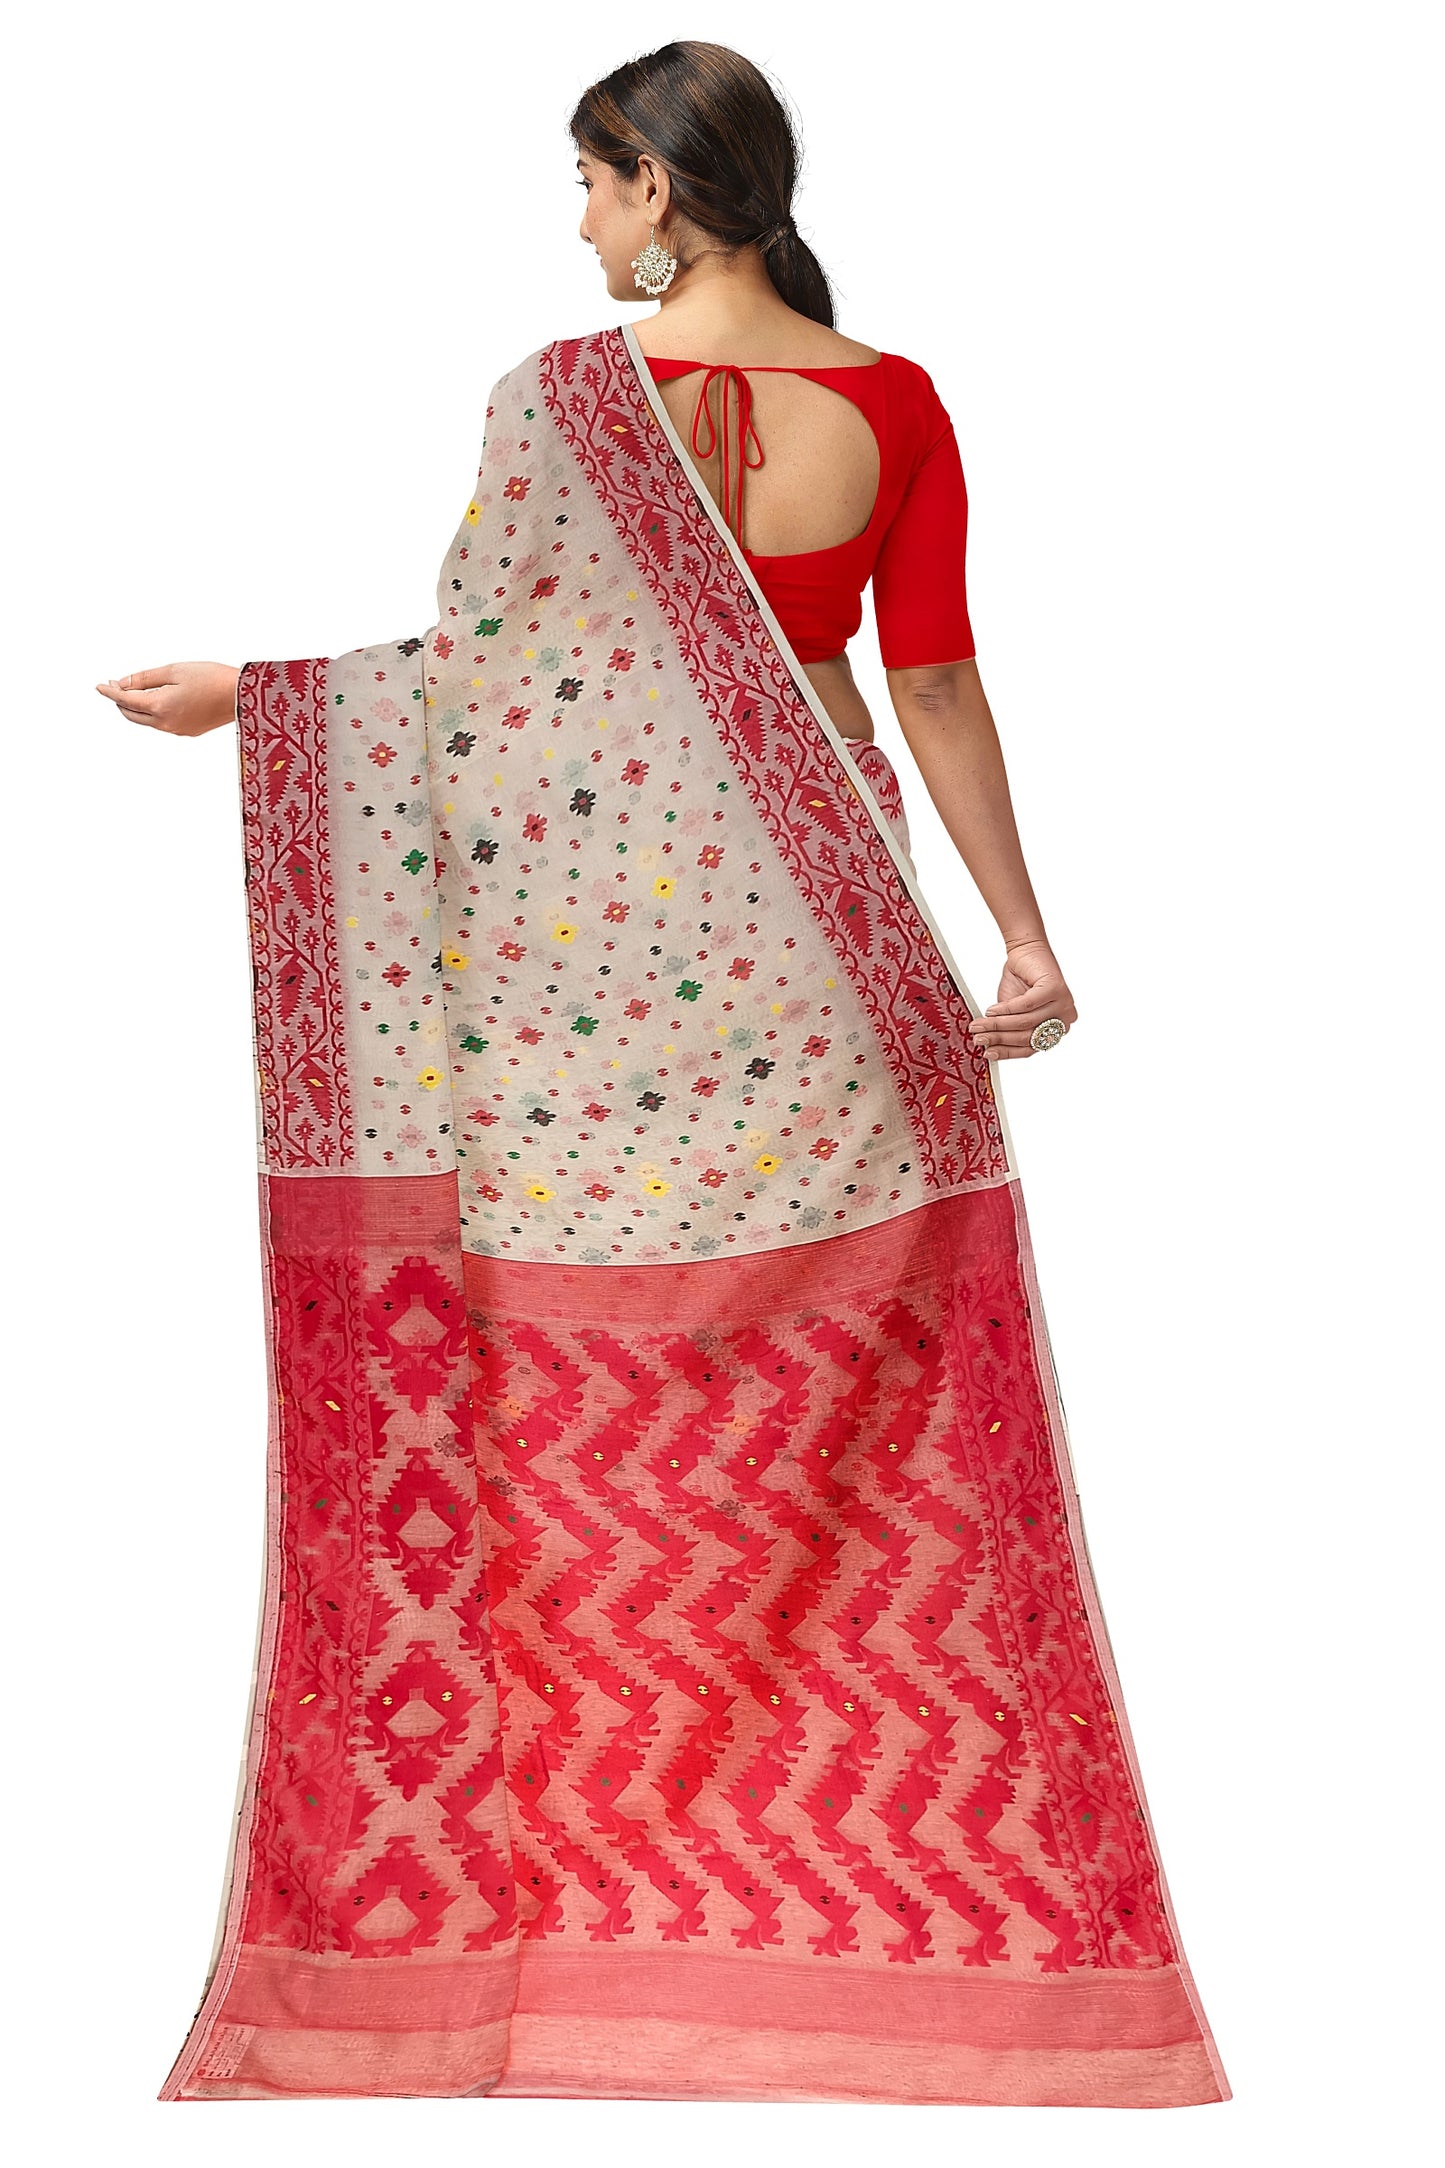 Off-White & Red Handloom Jacquard Weave Bangladesh Dhakai Design Saree